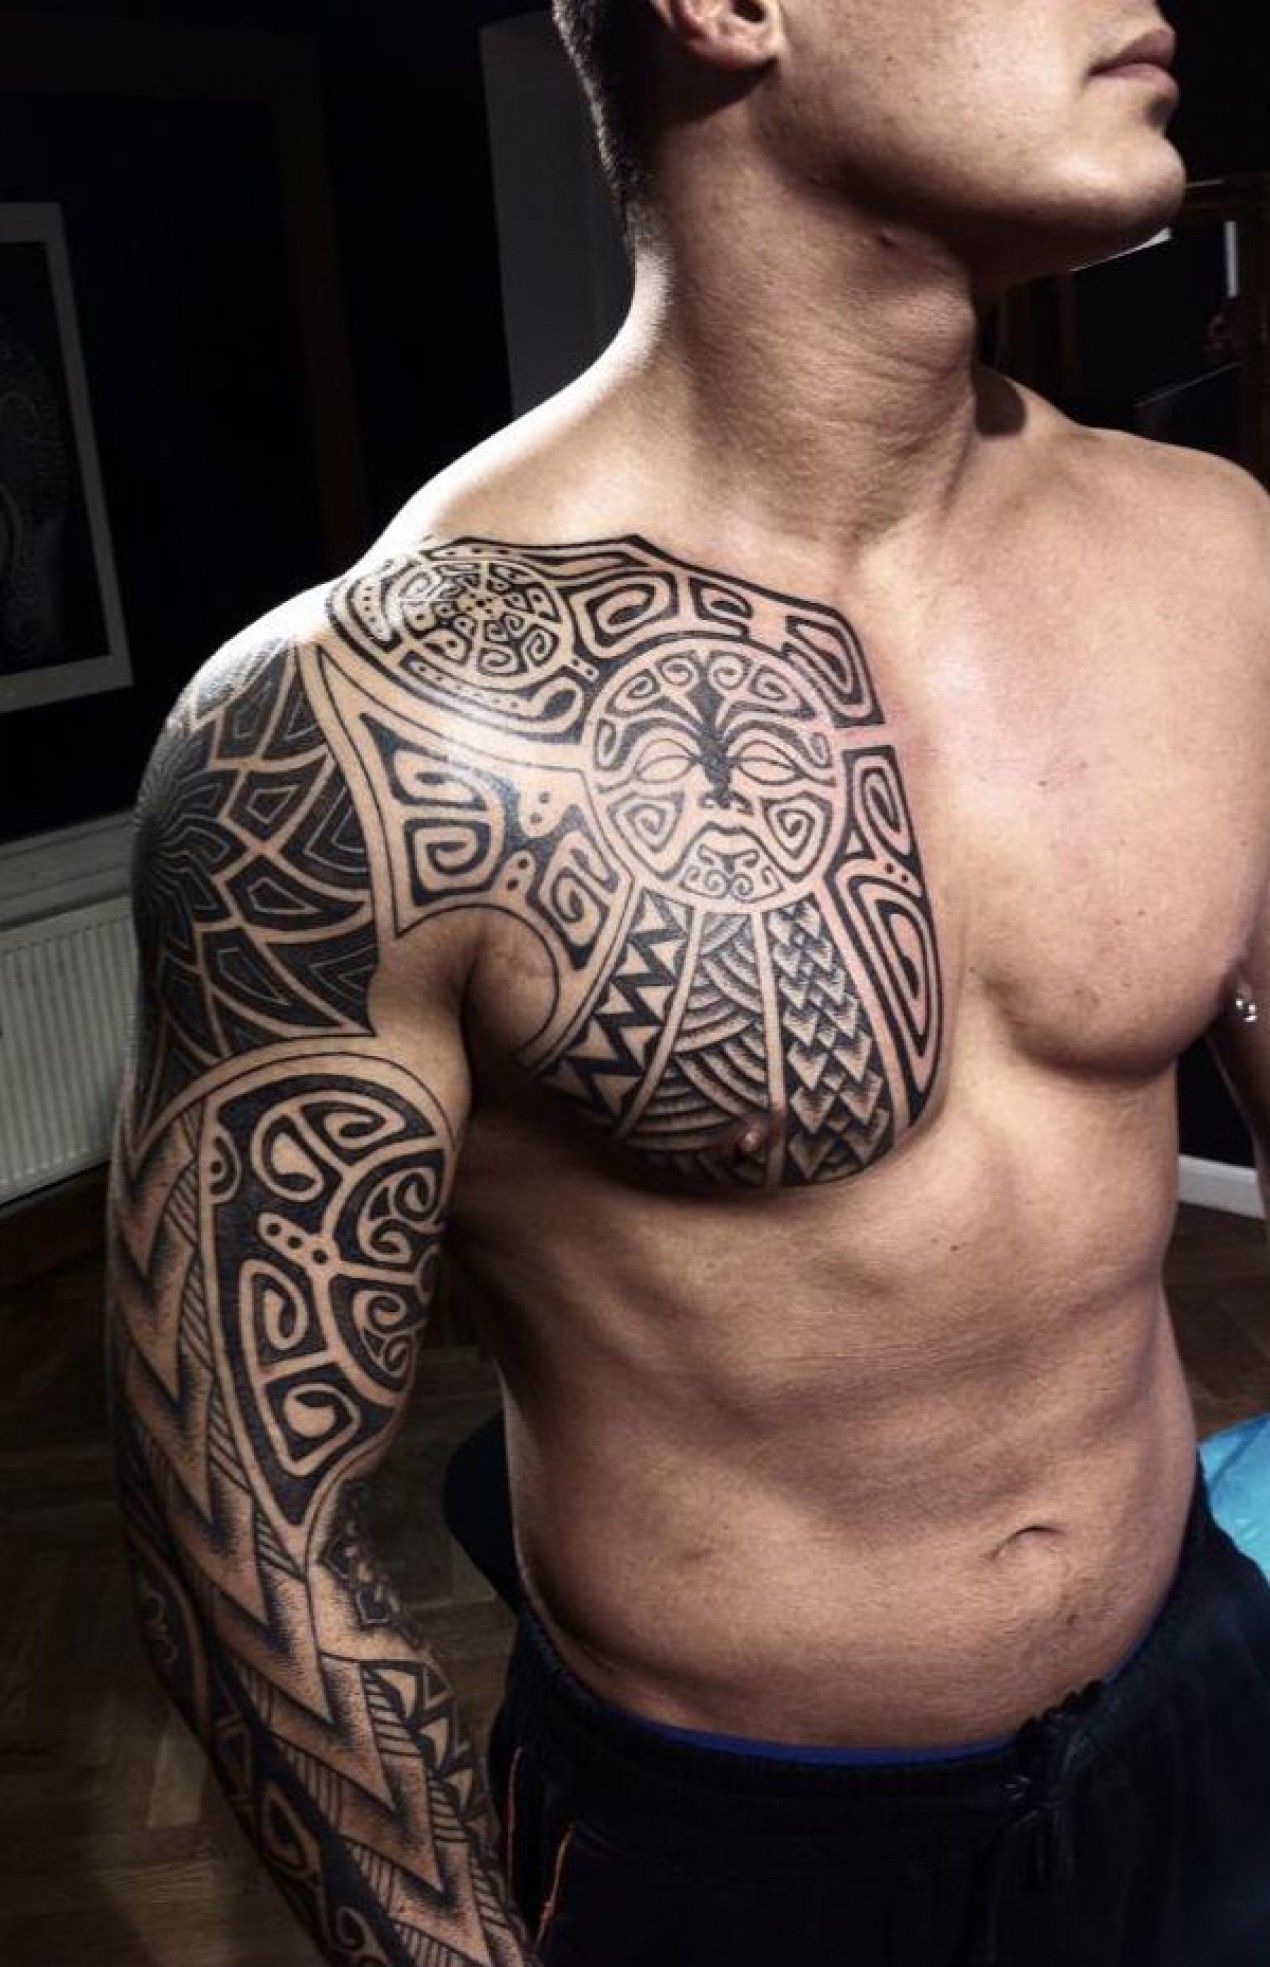 Tatouage maori homme